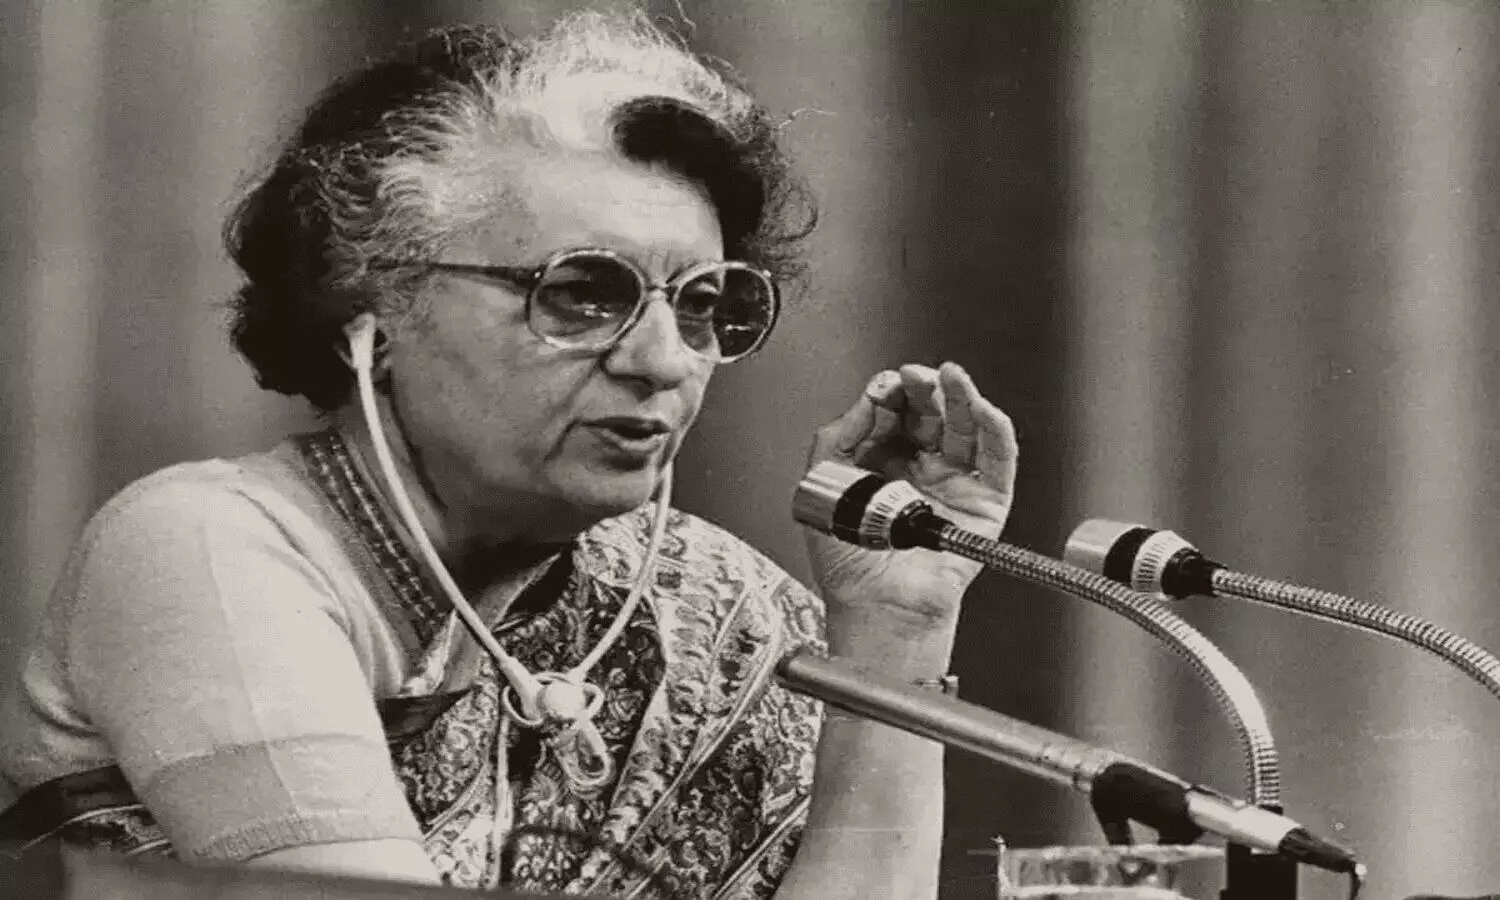 Indira Gandhi Birthday